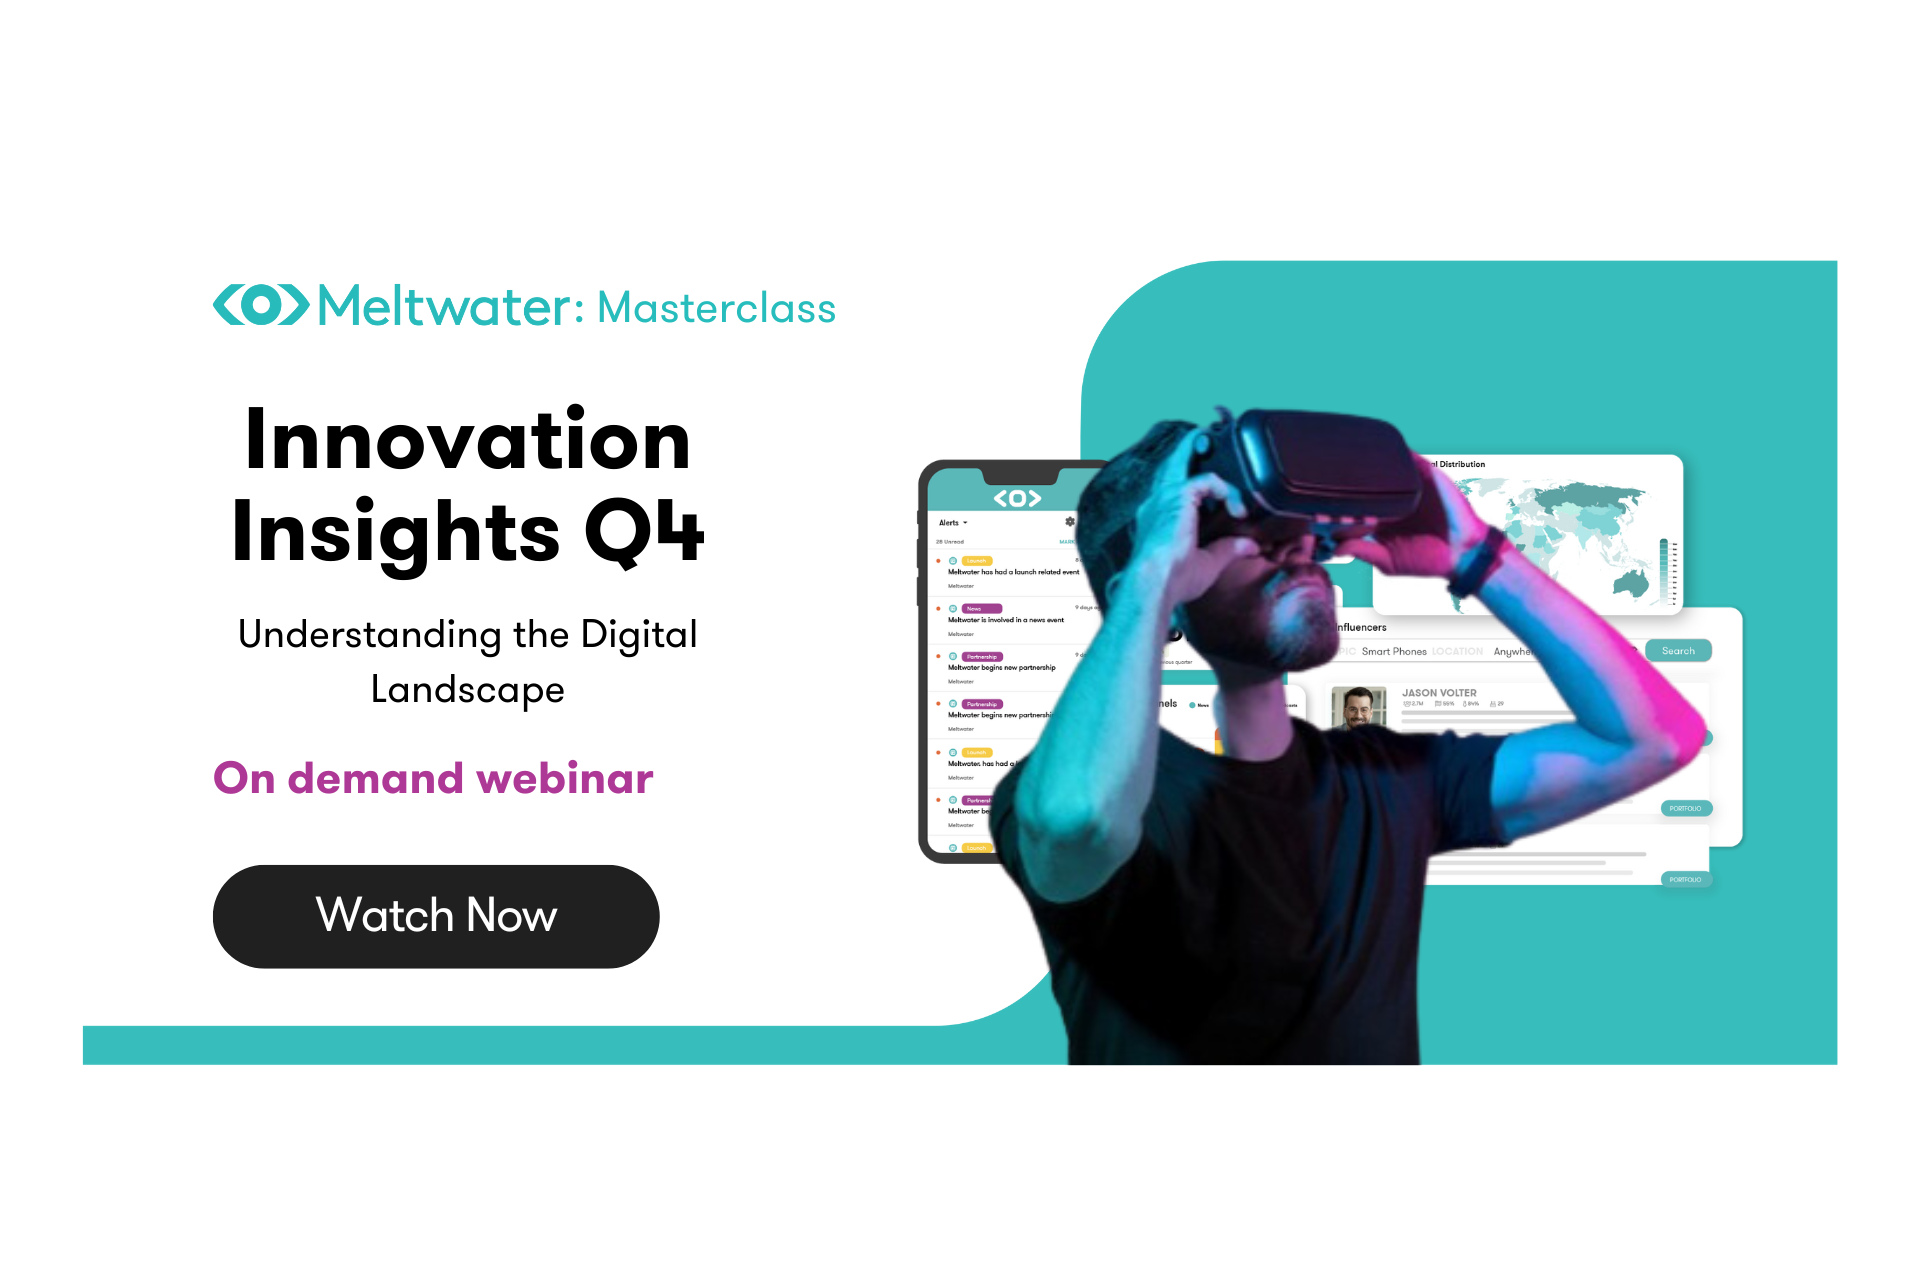 Meltwater Innovation insights Q4